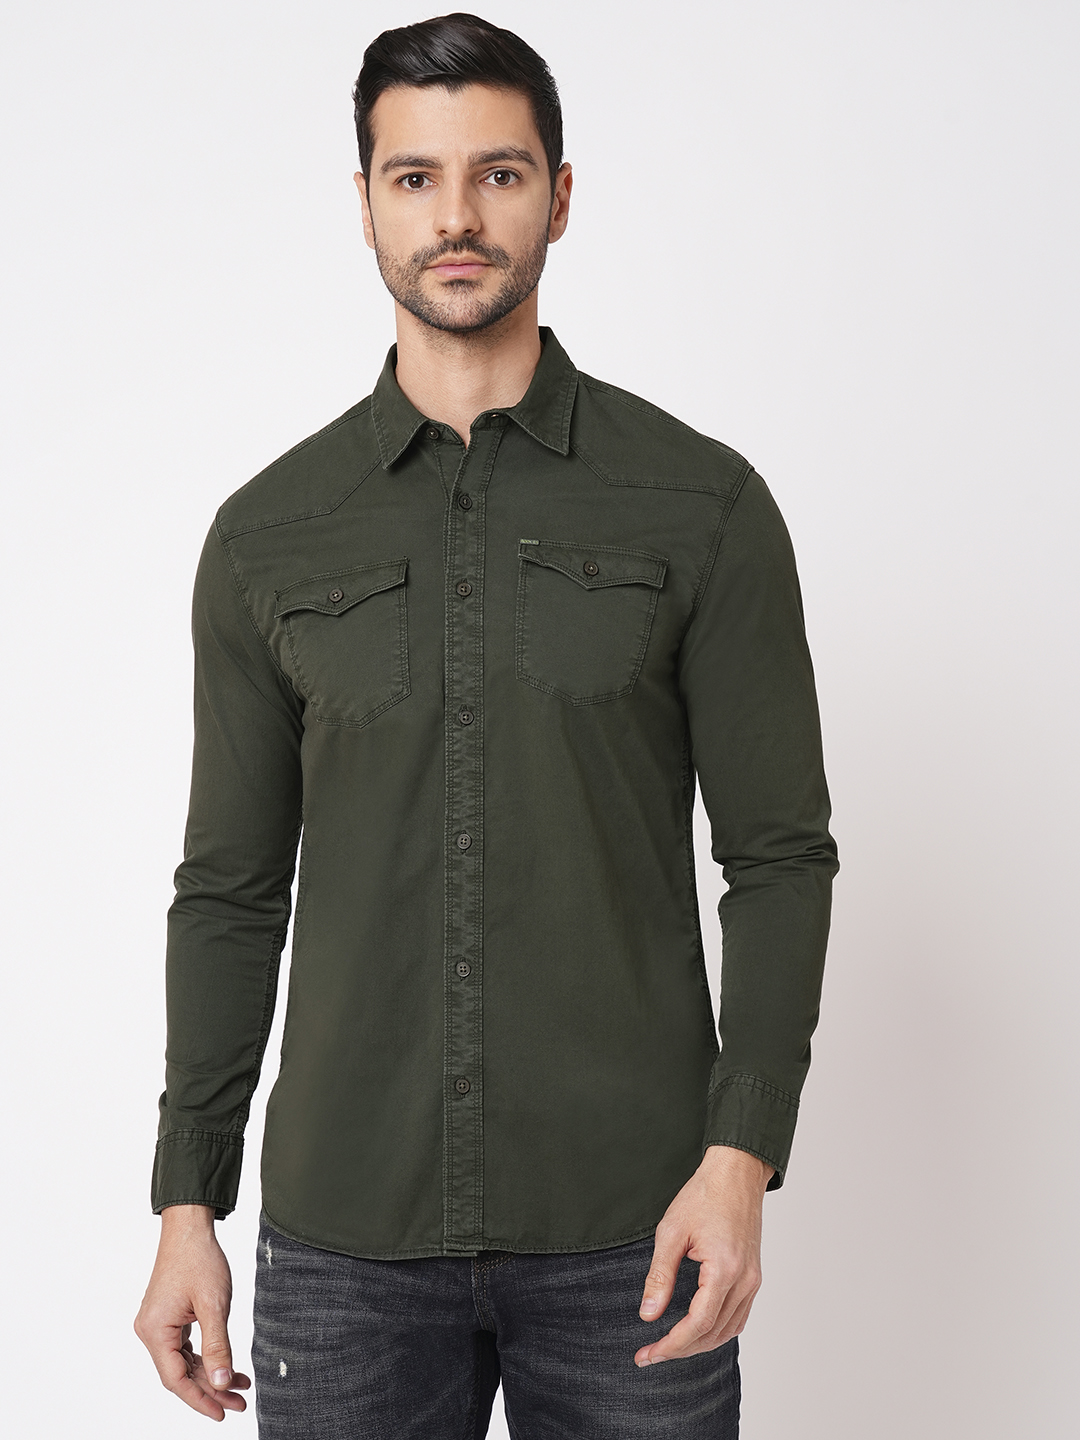 BADMAASH Men's Slim Fit Cotton British Green Lumberjack Shirt with Full  Sleeves - XL : Amazon.in: Clothing & Accessories